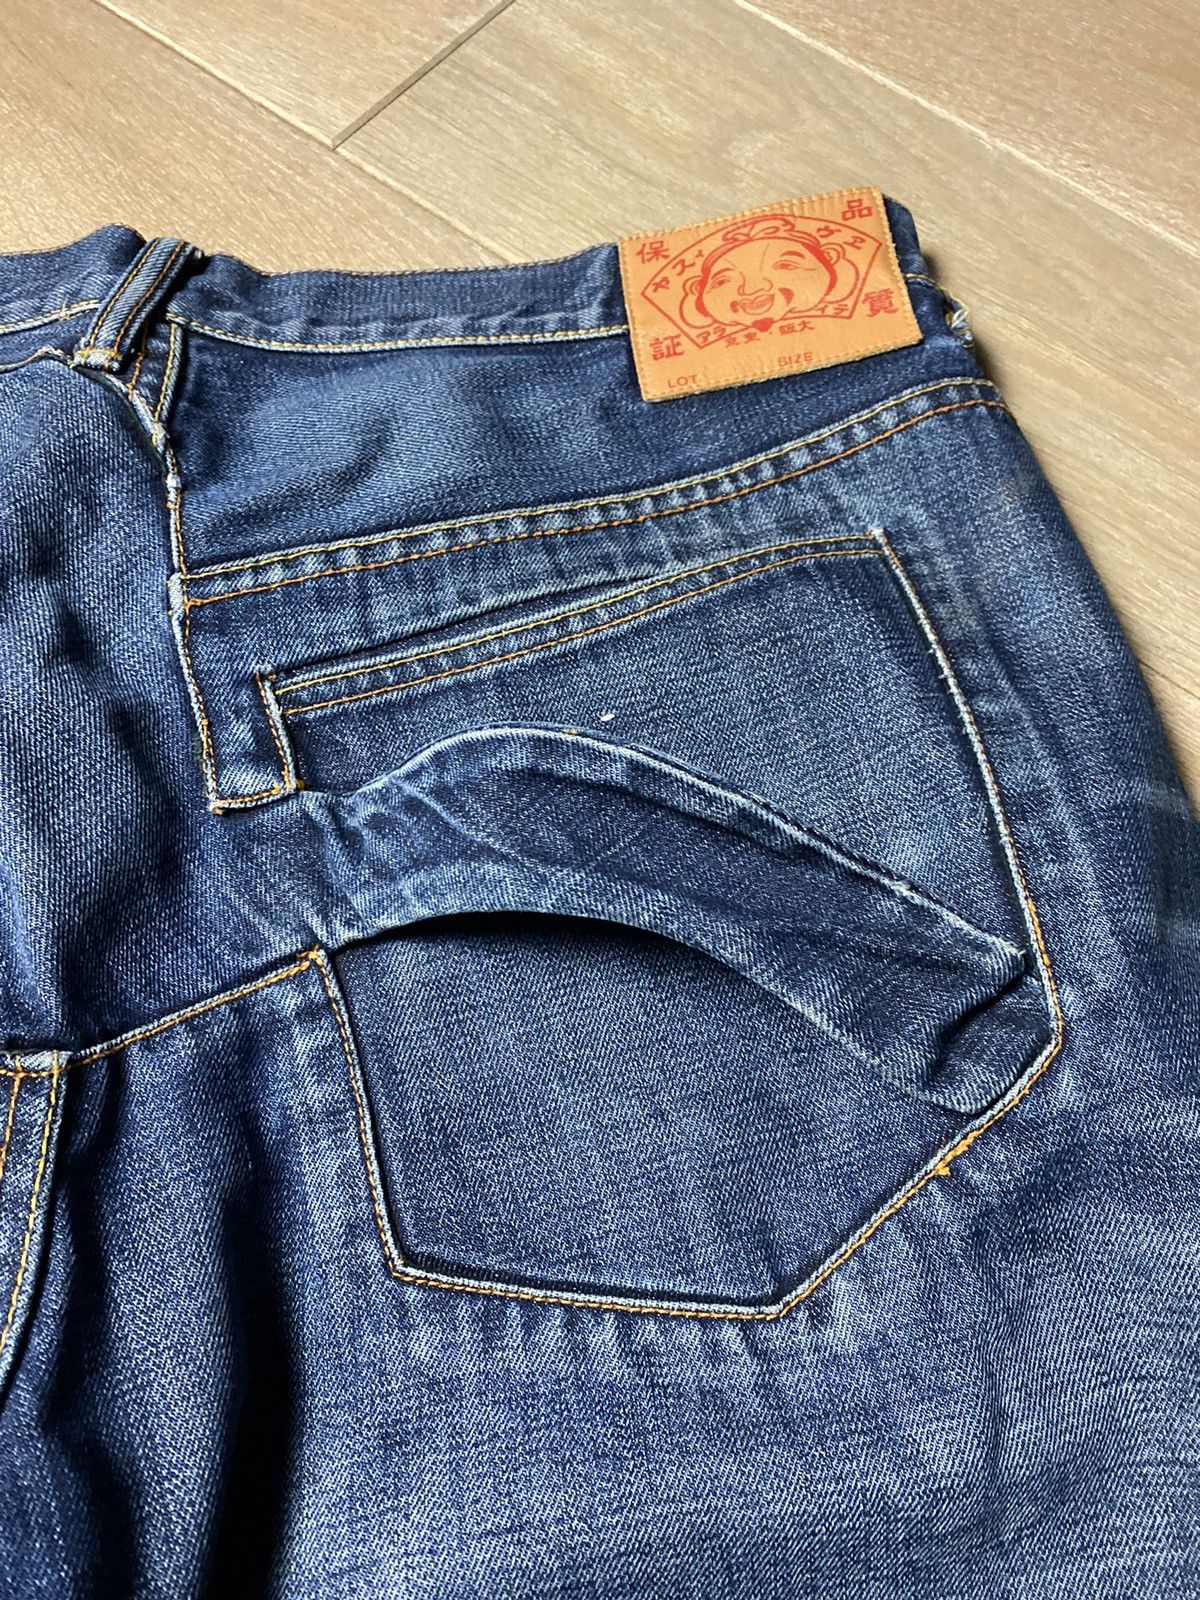 Vintage Evisu Japan vintage blue jeans denim pants big seagull logo Size US 38 / EU 54 - 6 Thumbnail